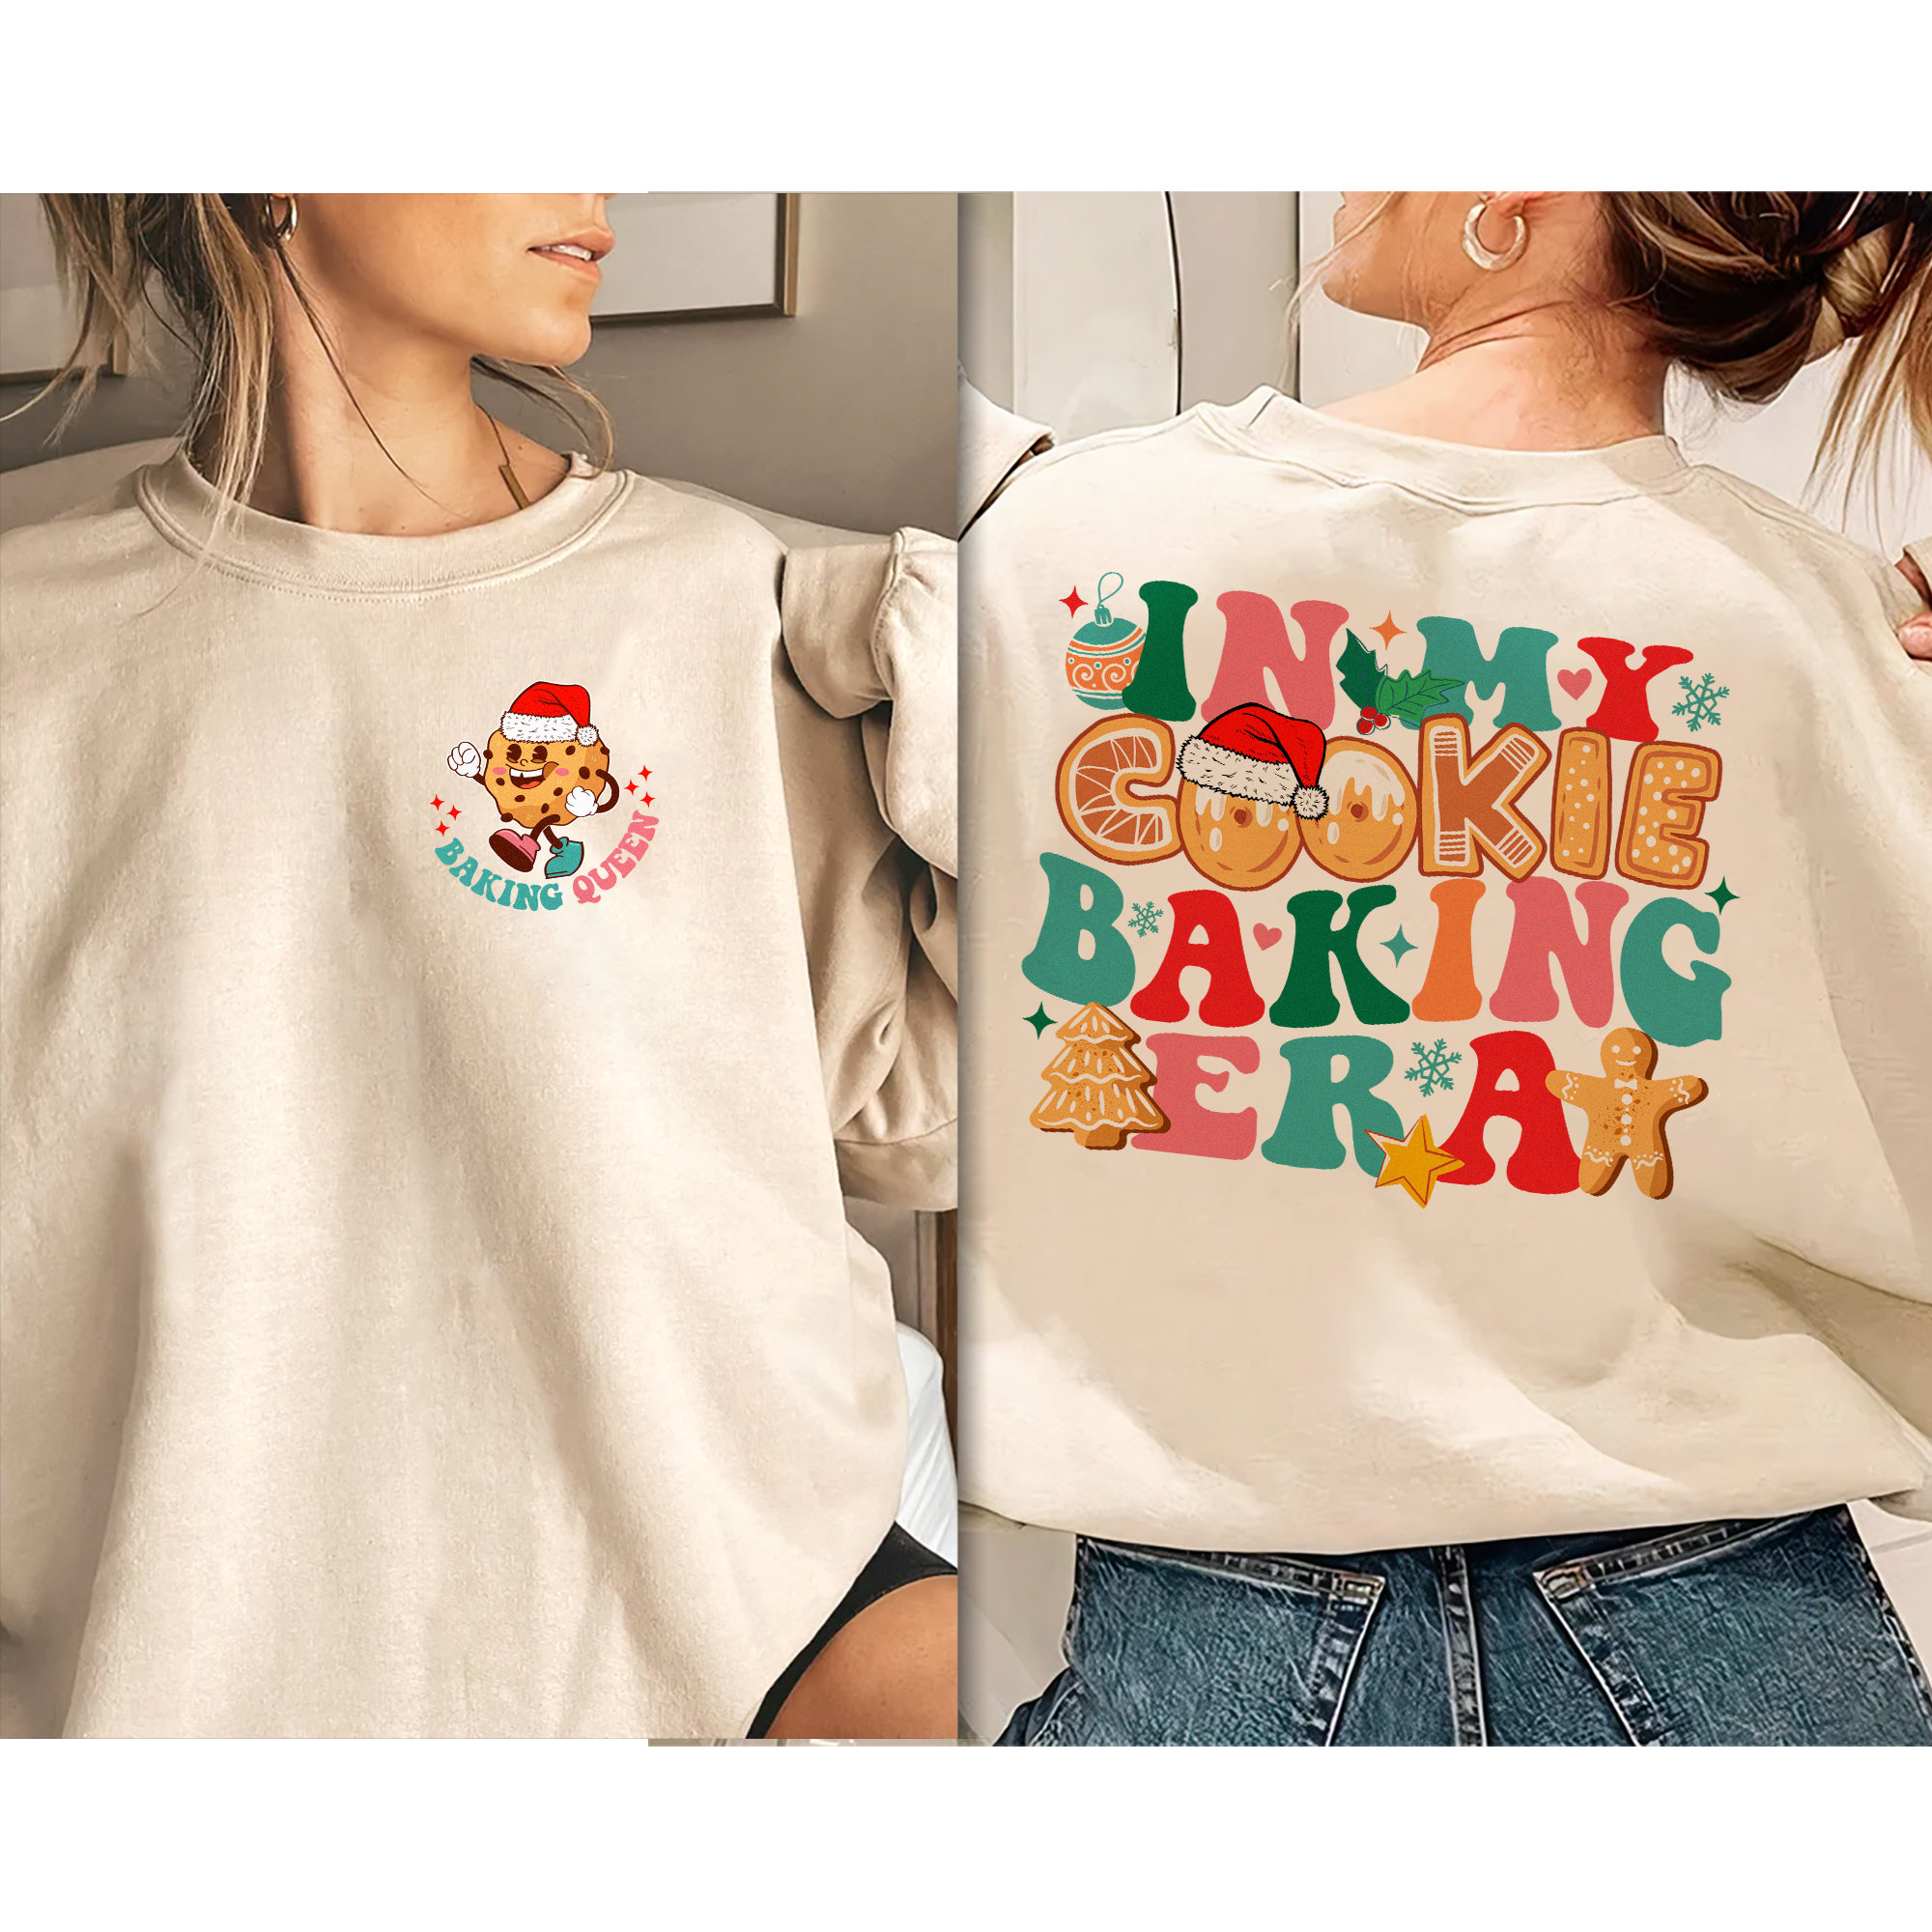 In My Cookie Baking Era T-Shirt, Christmas Baking Crew Tee, Baker Christmas Shirt